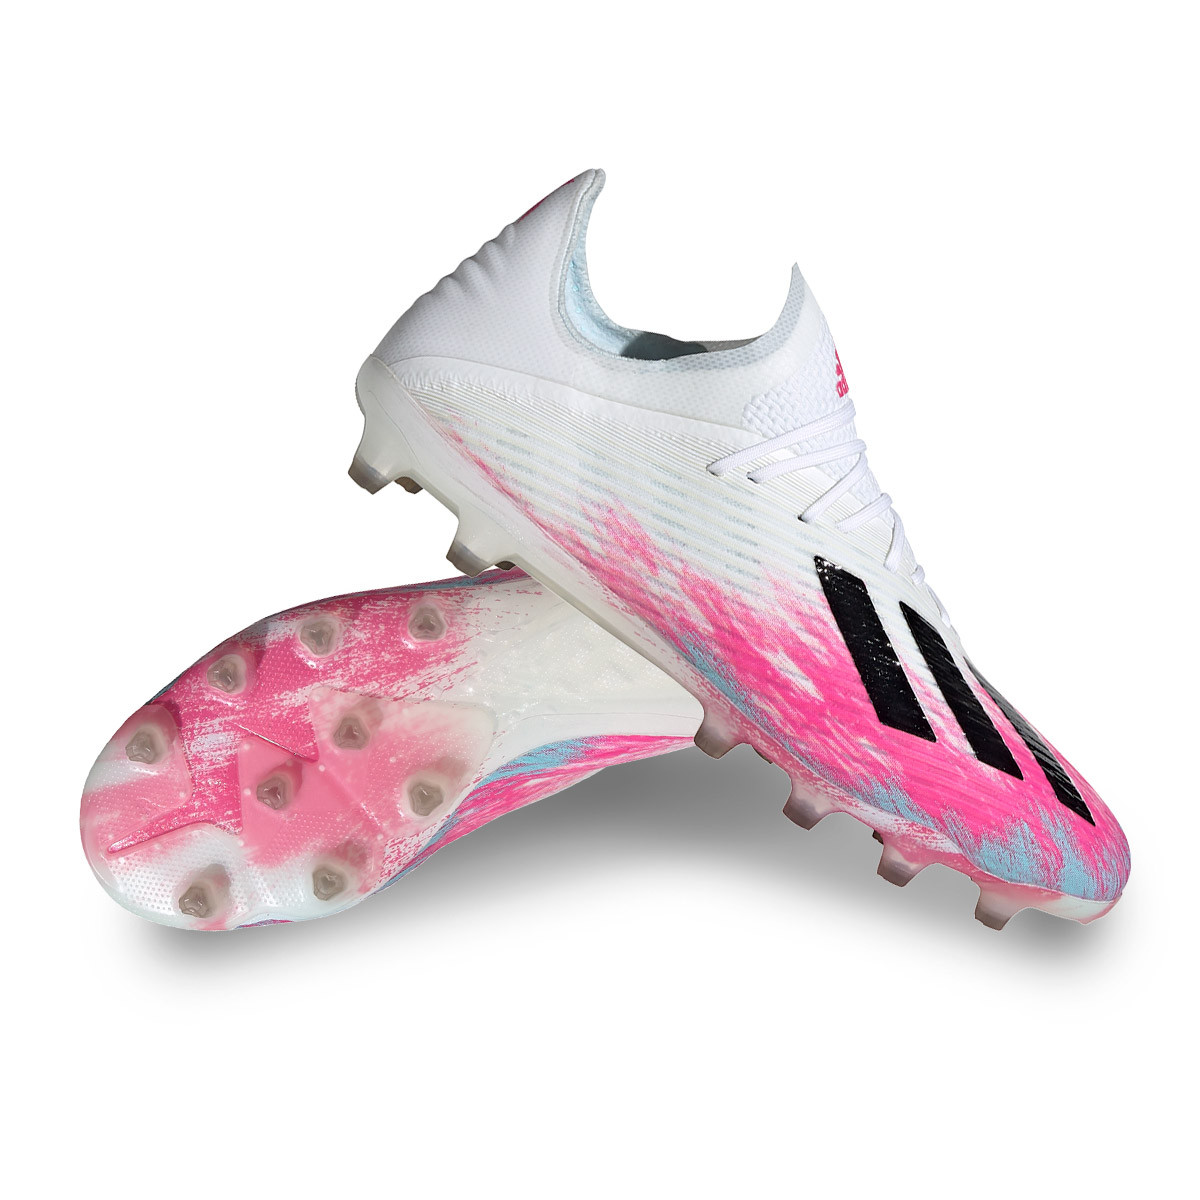 Football Boots adidas X 19.1 AG White 